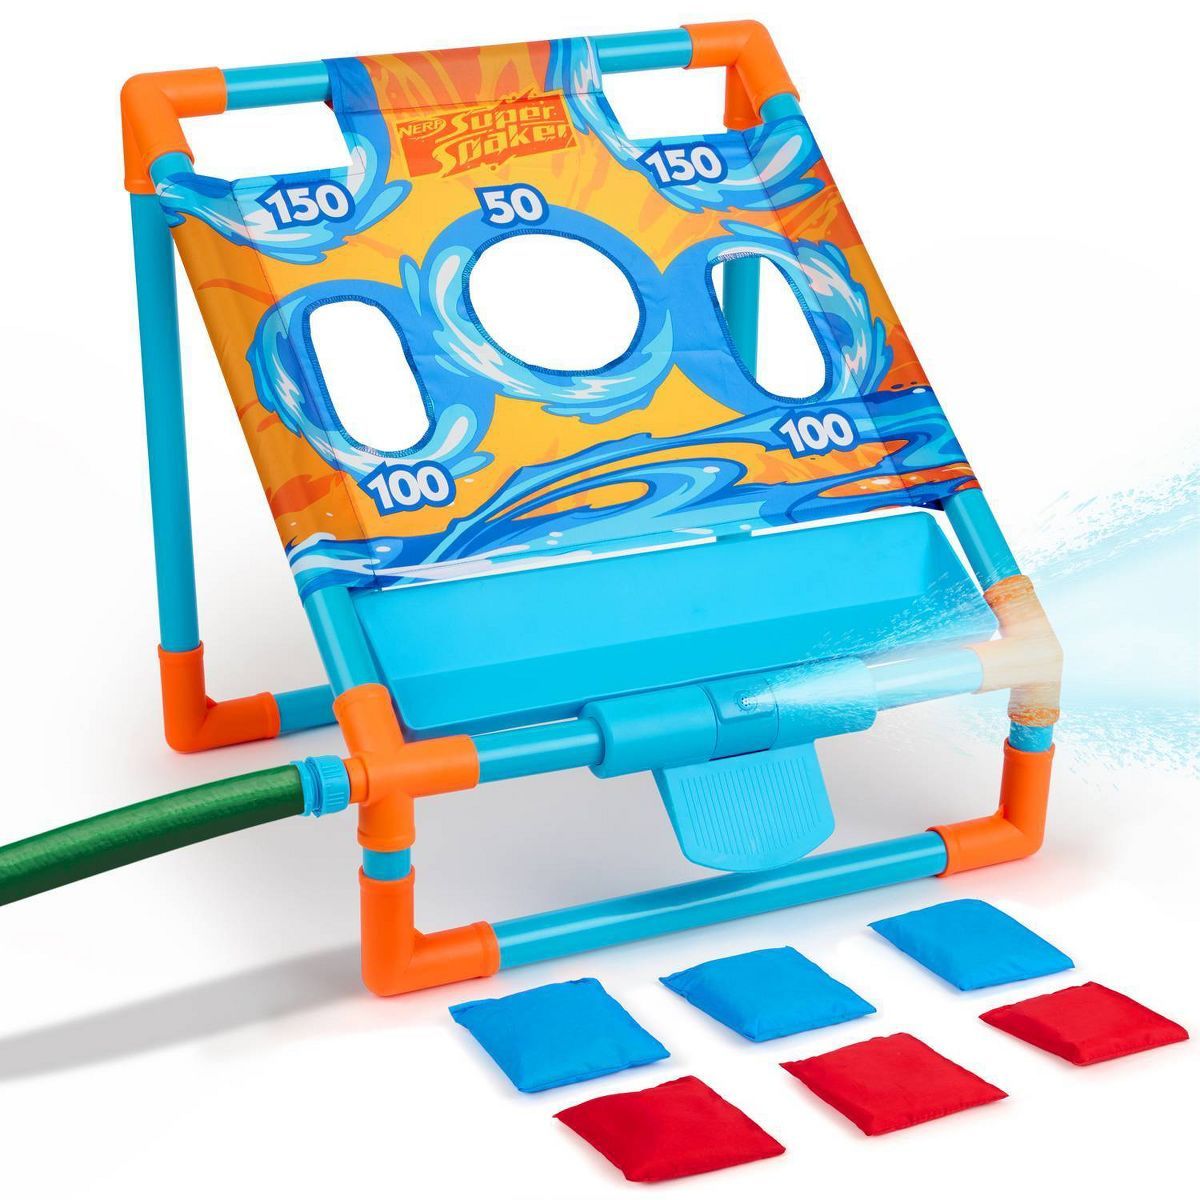 NERF Super Soaker Toss ‘N Splash Game by WowWee | Target